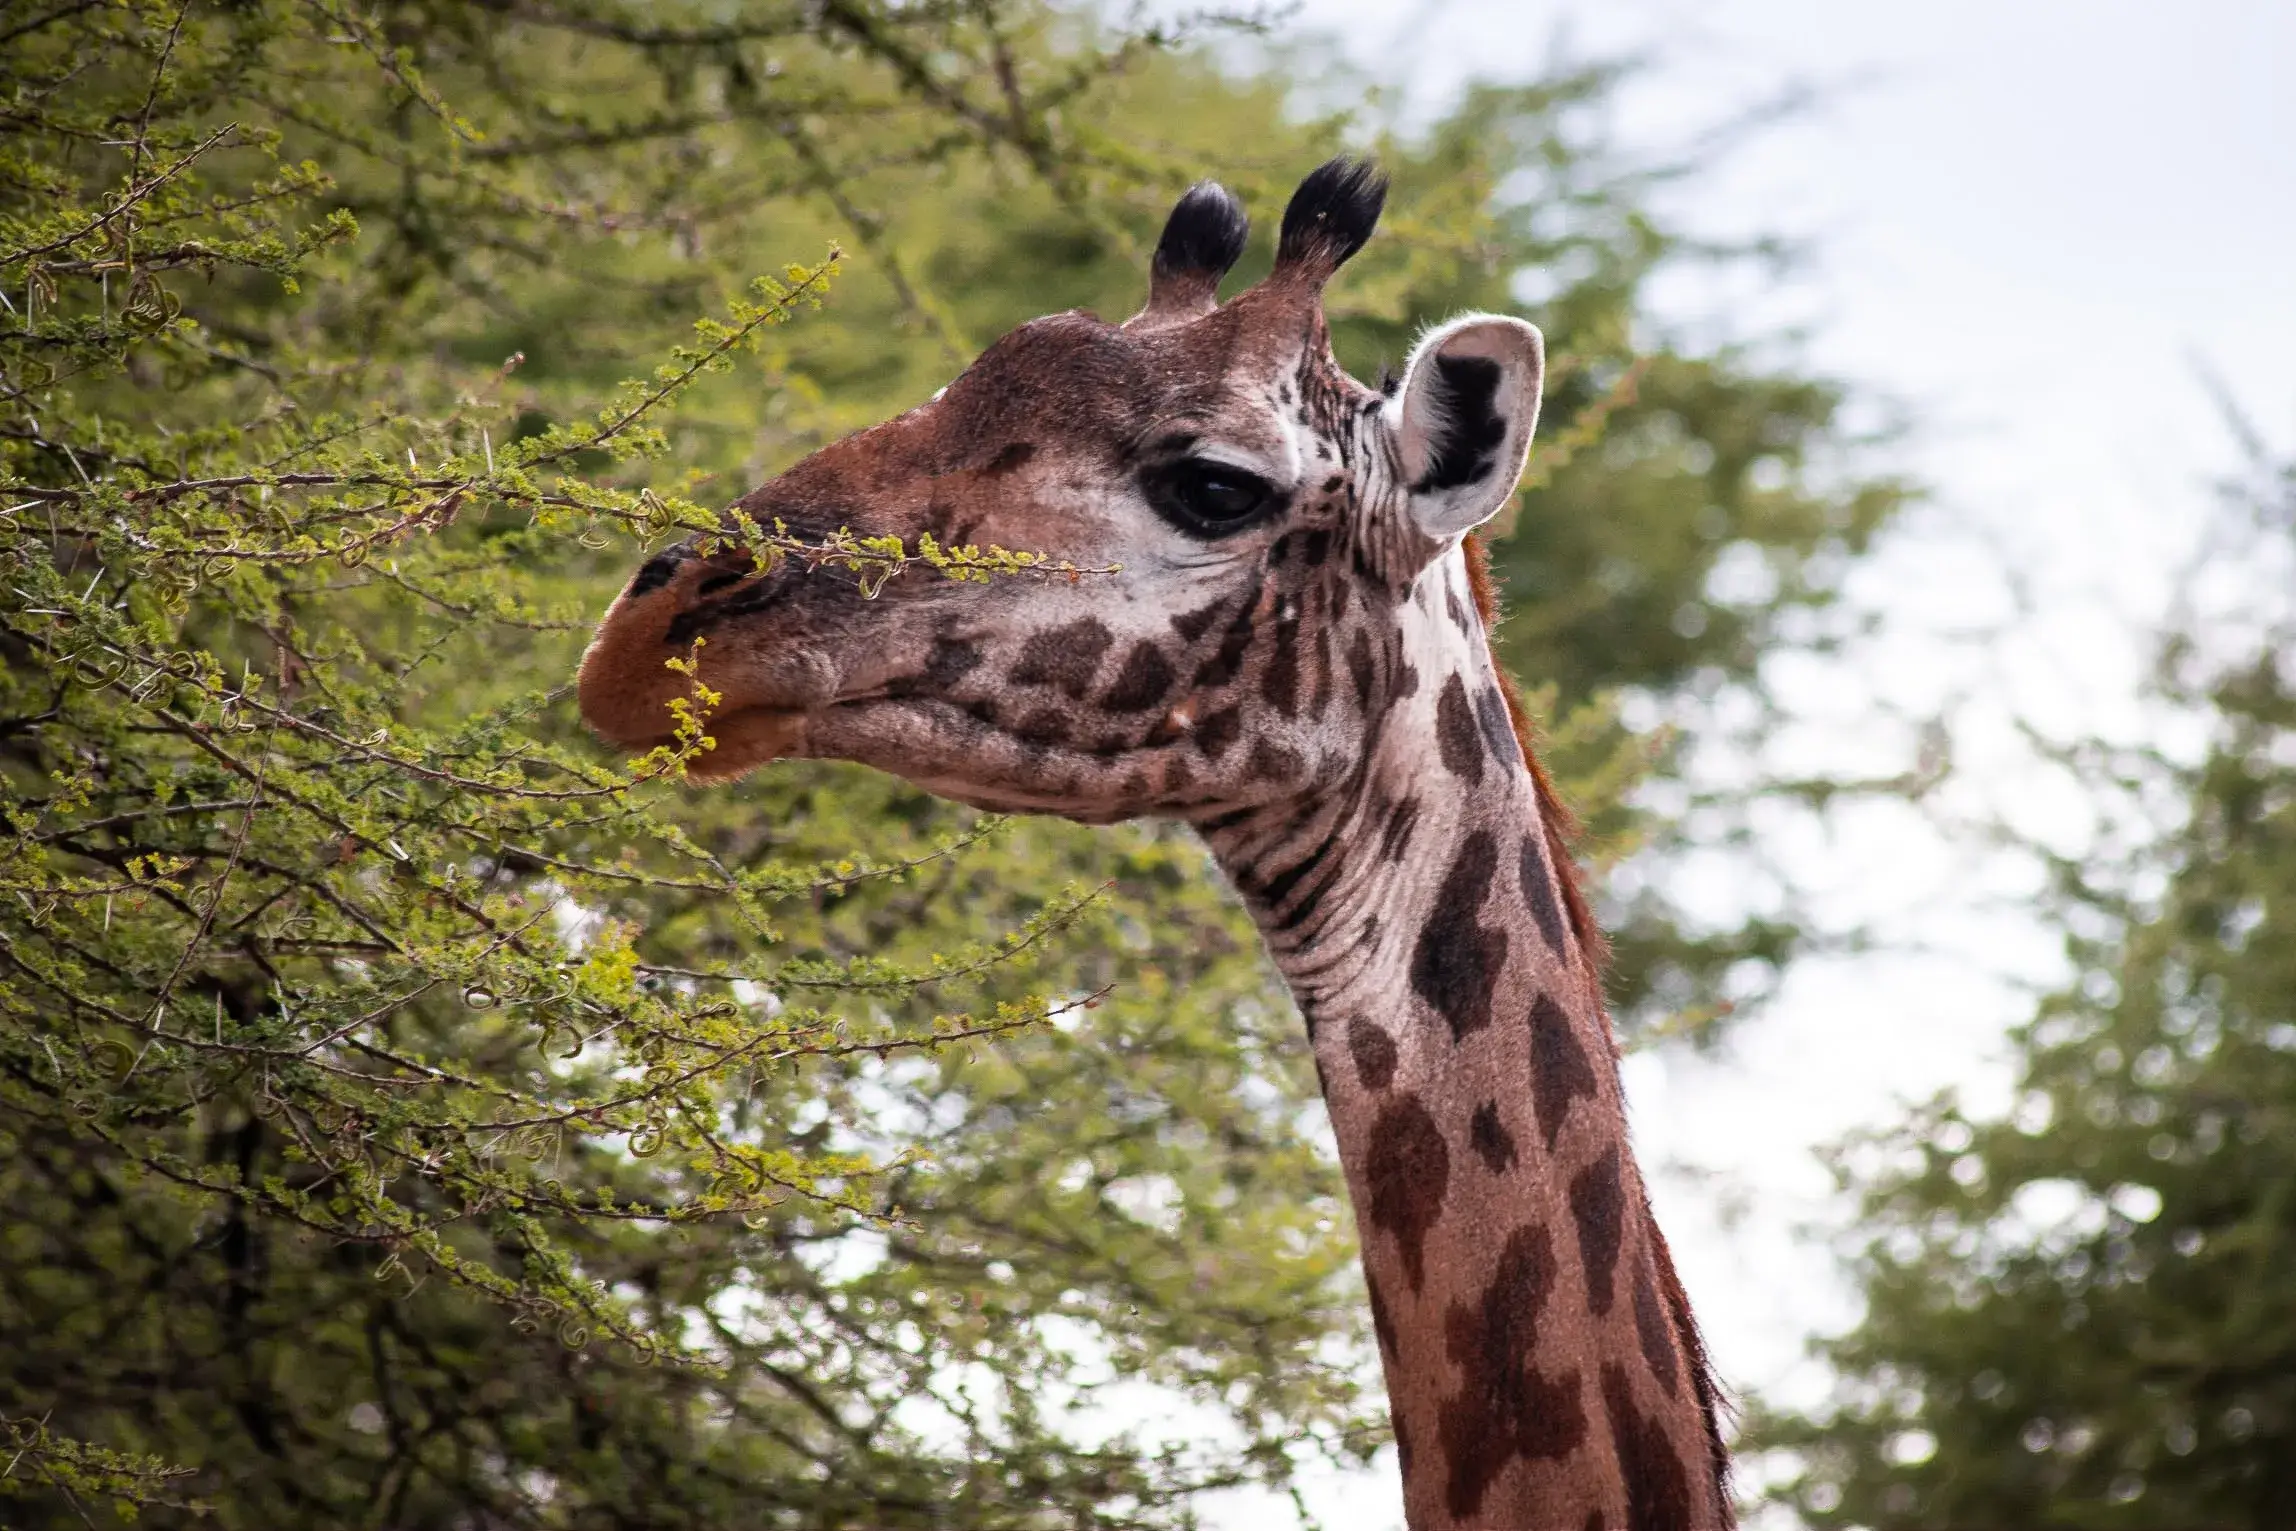 a giraffe spotted while eating in Tanzanian safari jungles